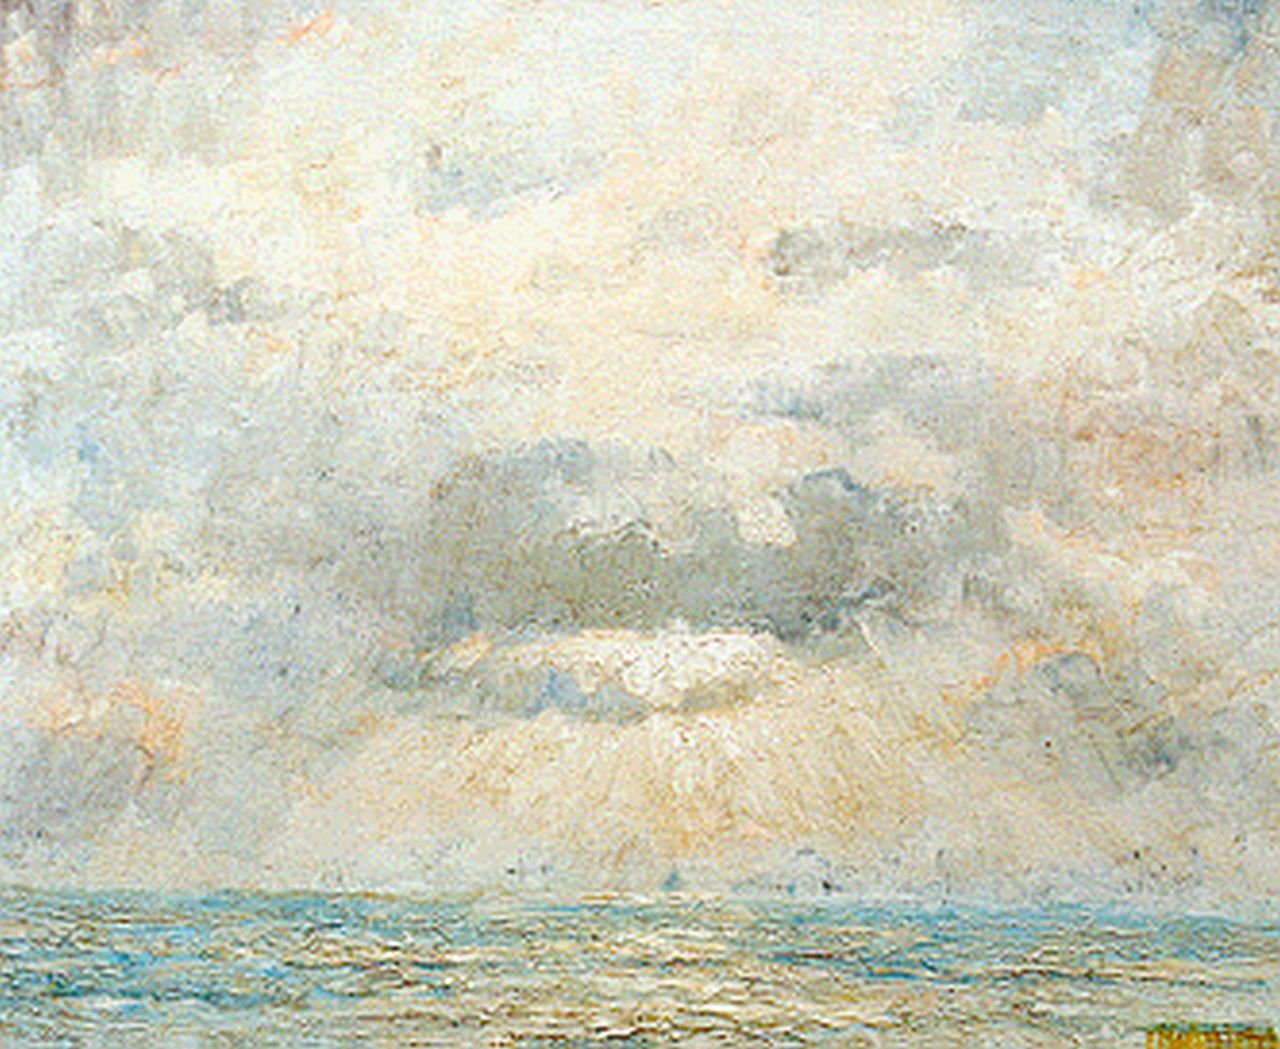 P.E.A. Mansvelt Beck | Evening twilight, oil on canvas, 70.4 x 84.5 cm, signed l.r.